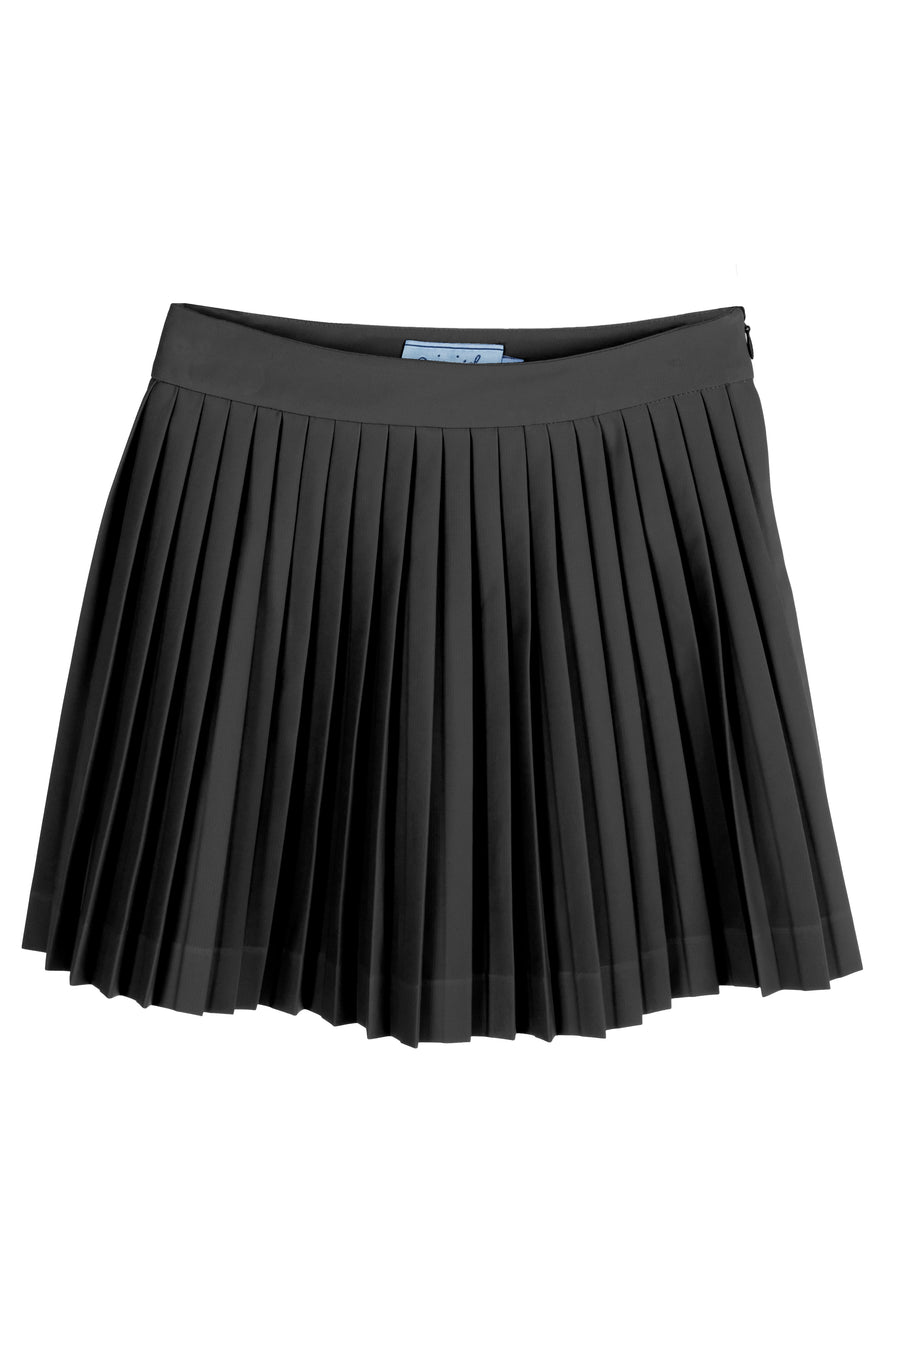 Black pleated skirt by Mimisol